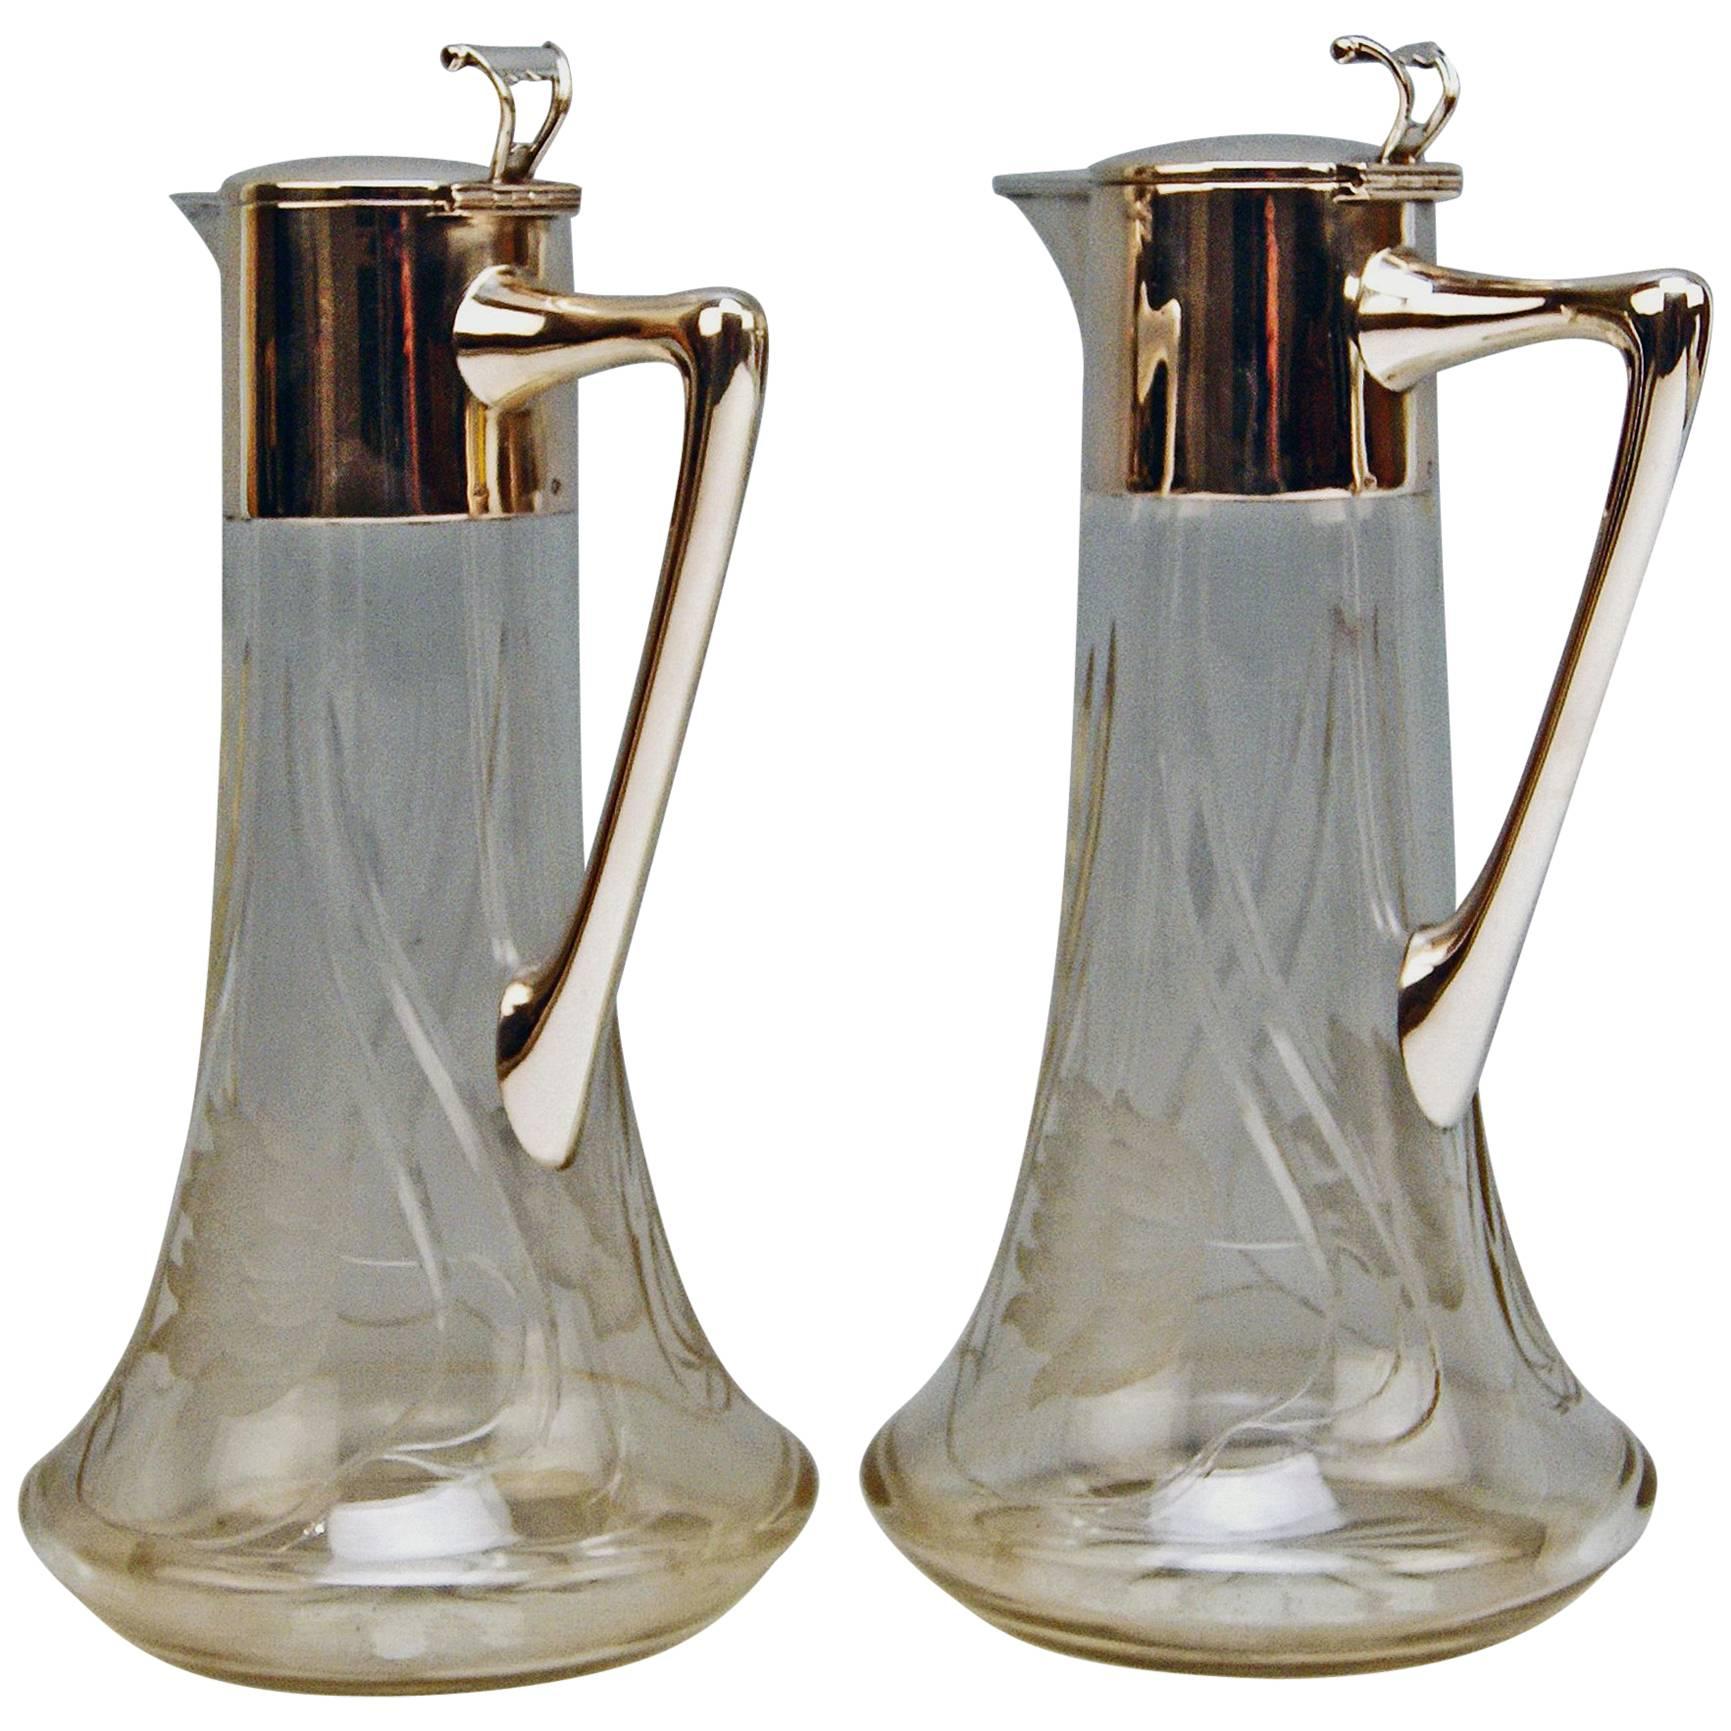  Silver 800 Two Jugs Decanters Glass Art Nouveau Alexander Birkl Vienna, 1900